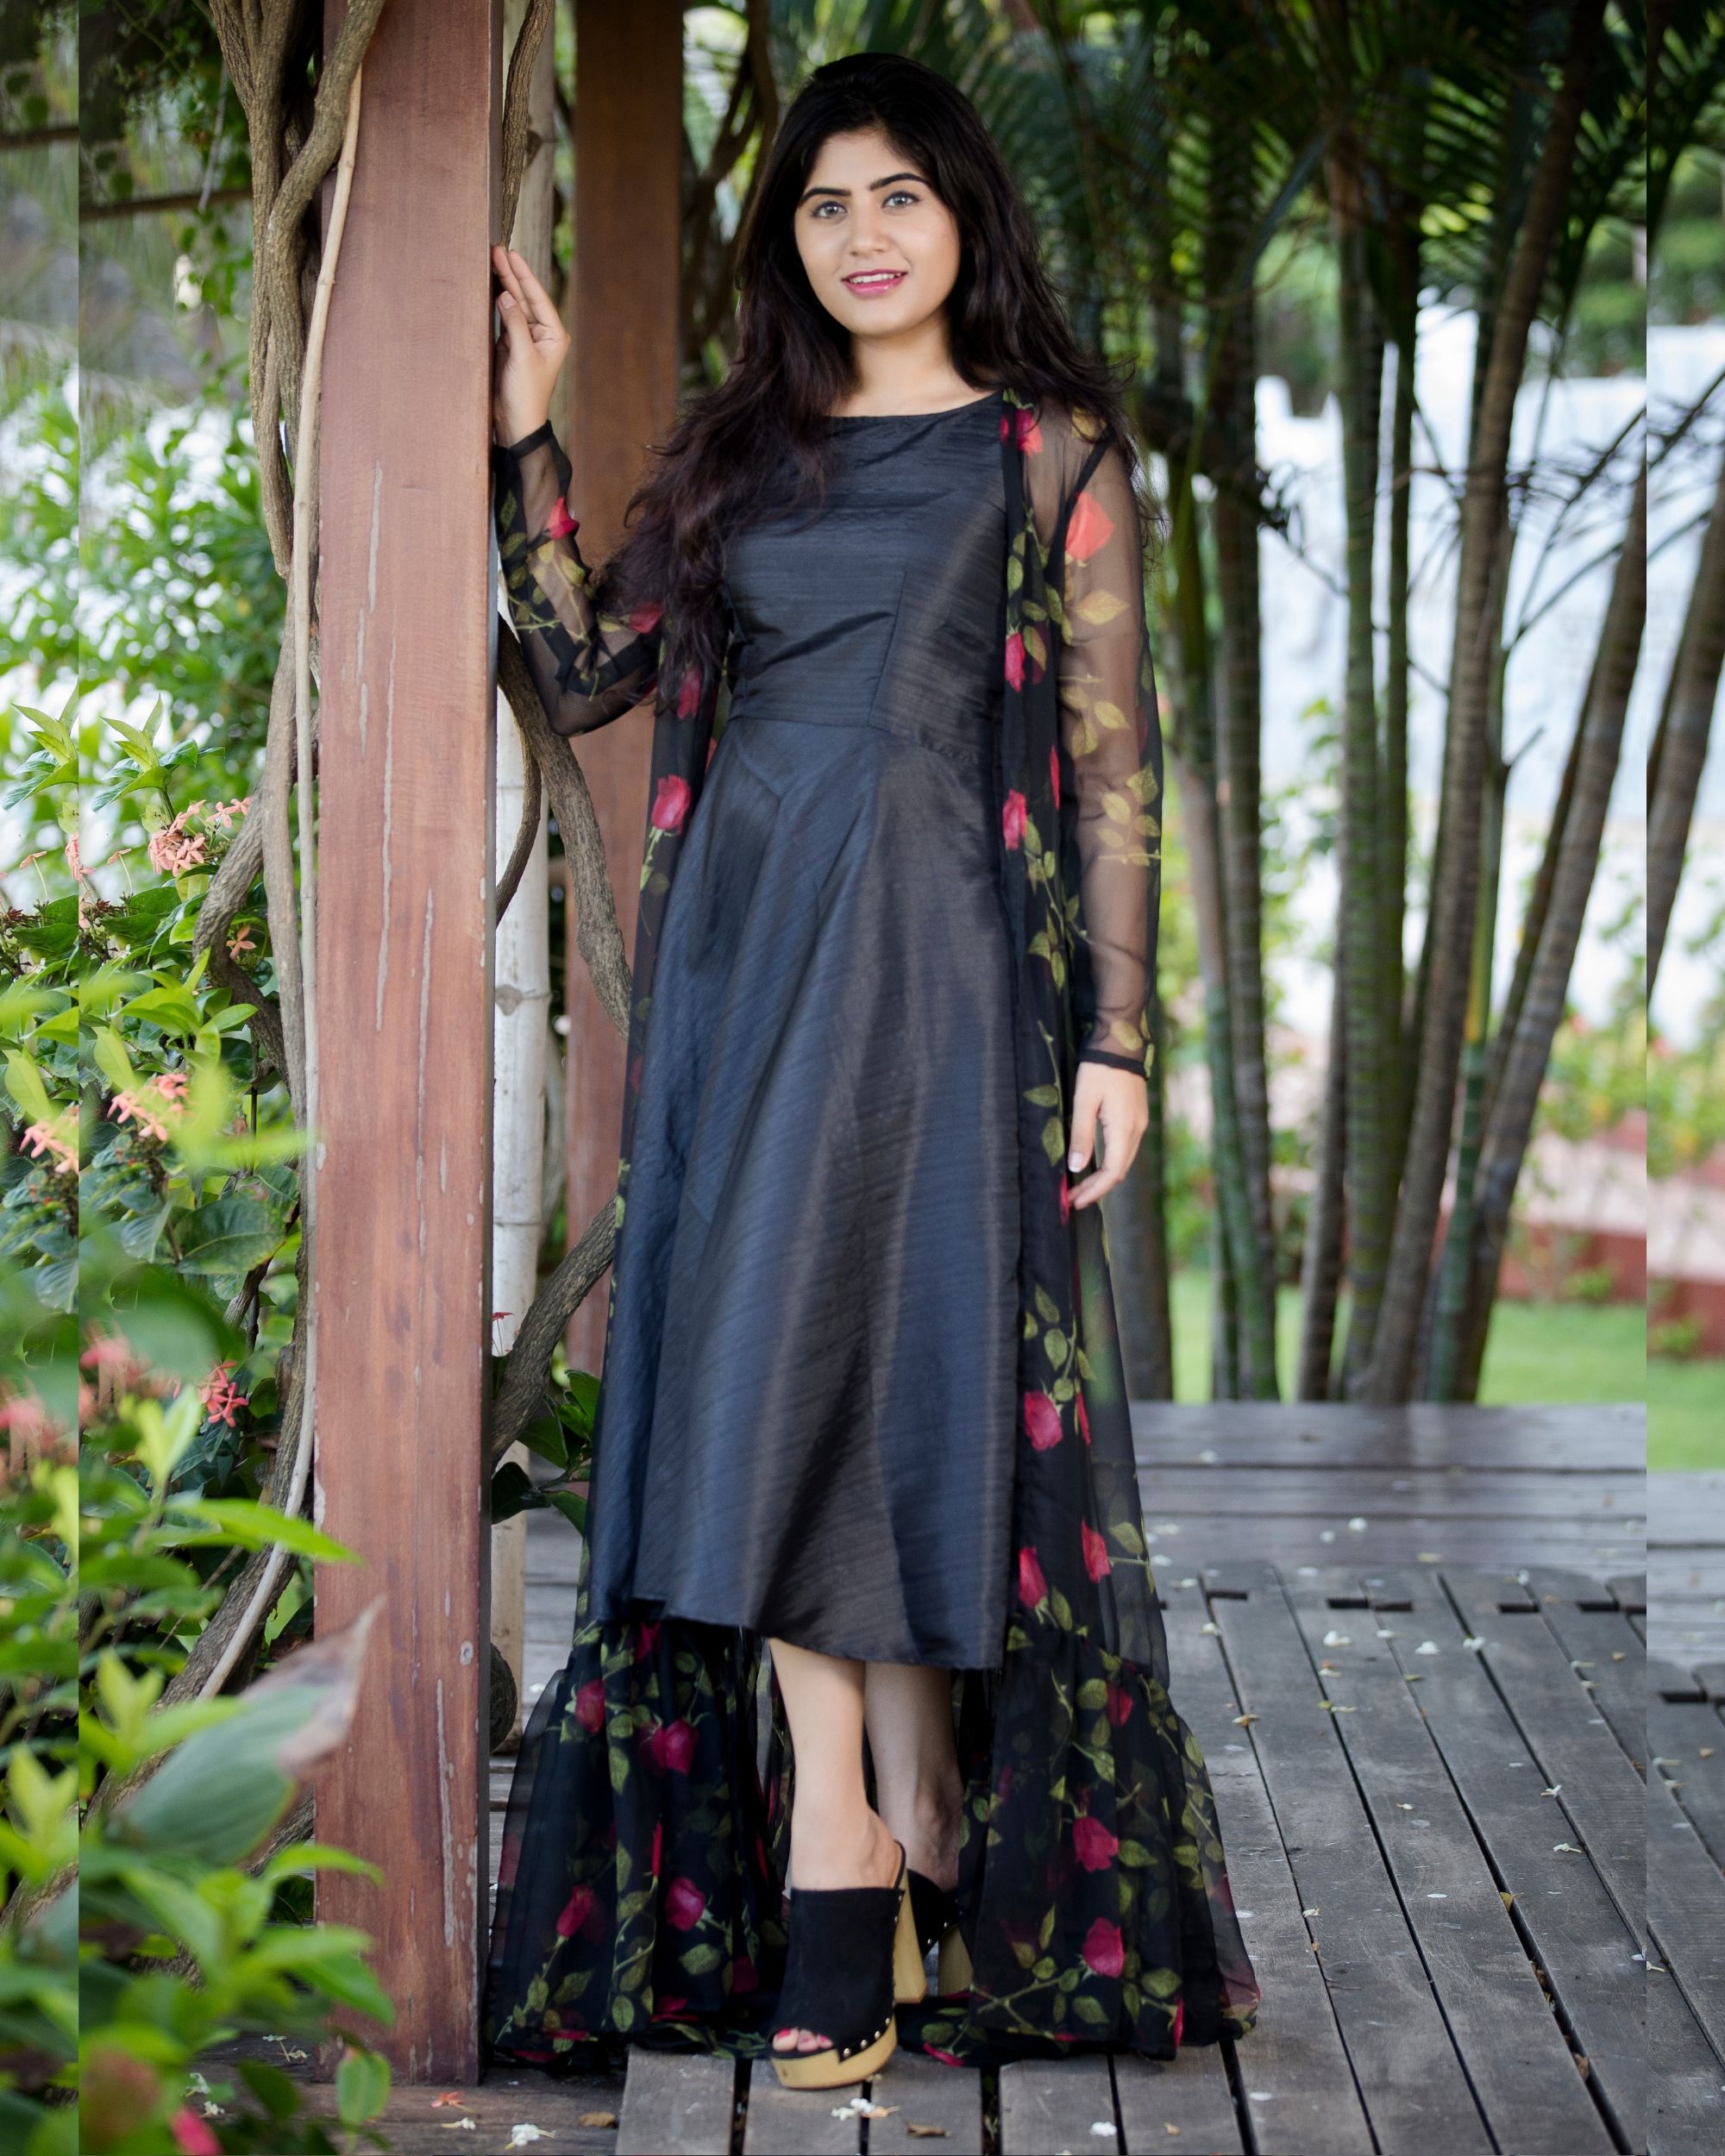 Black dress with floral print jacket